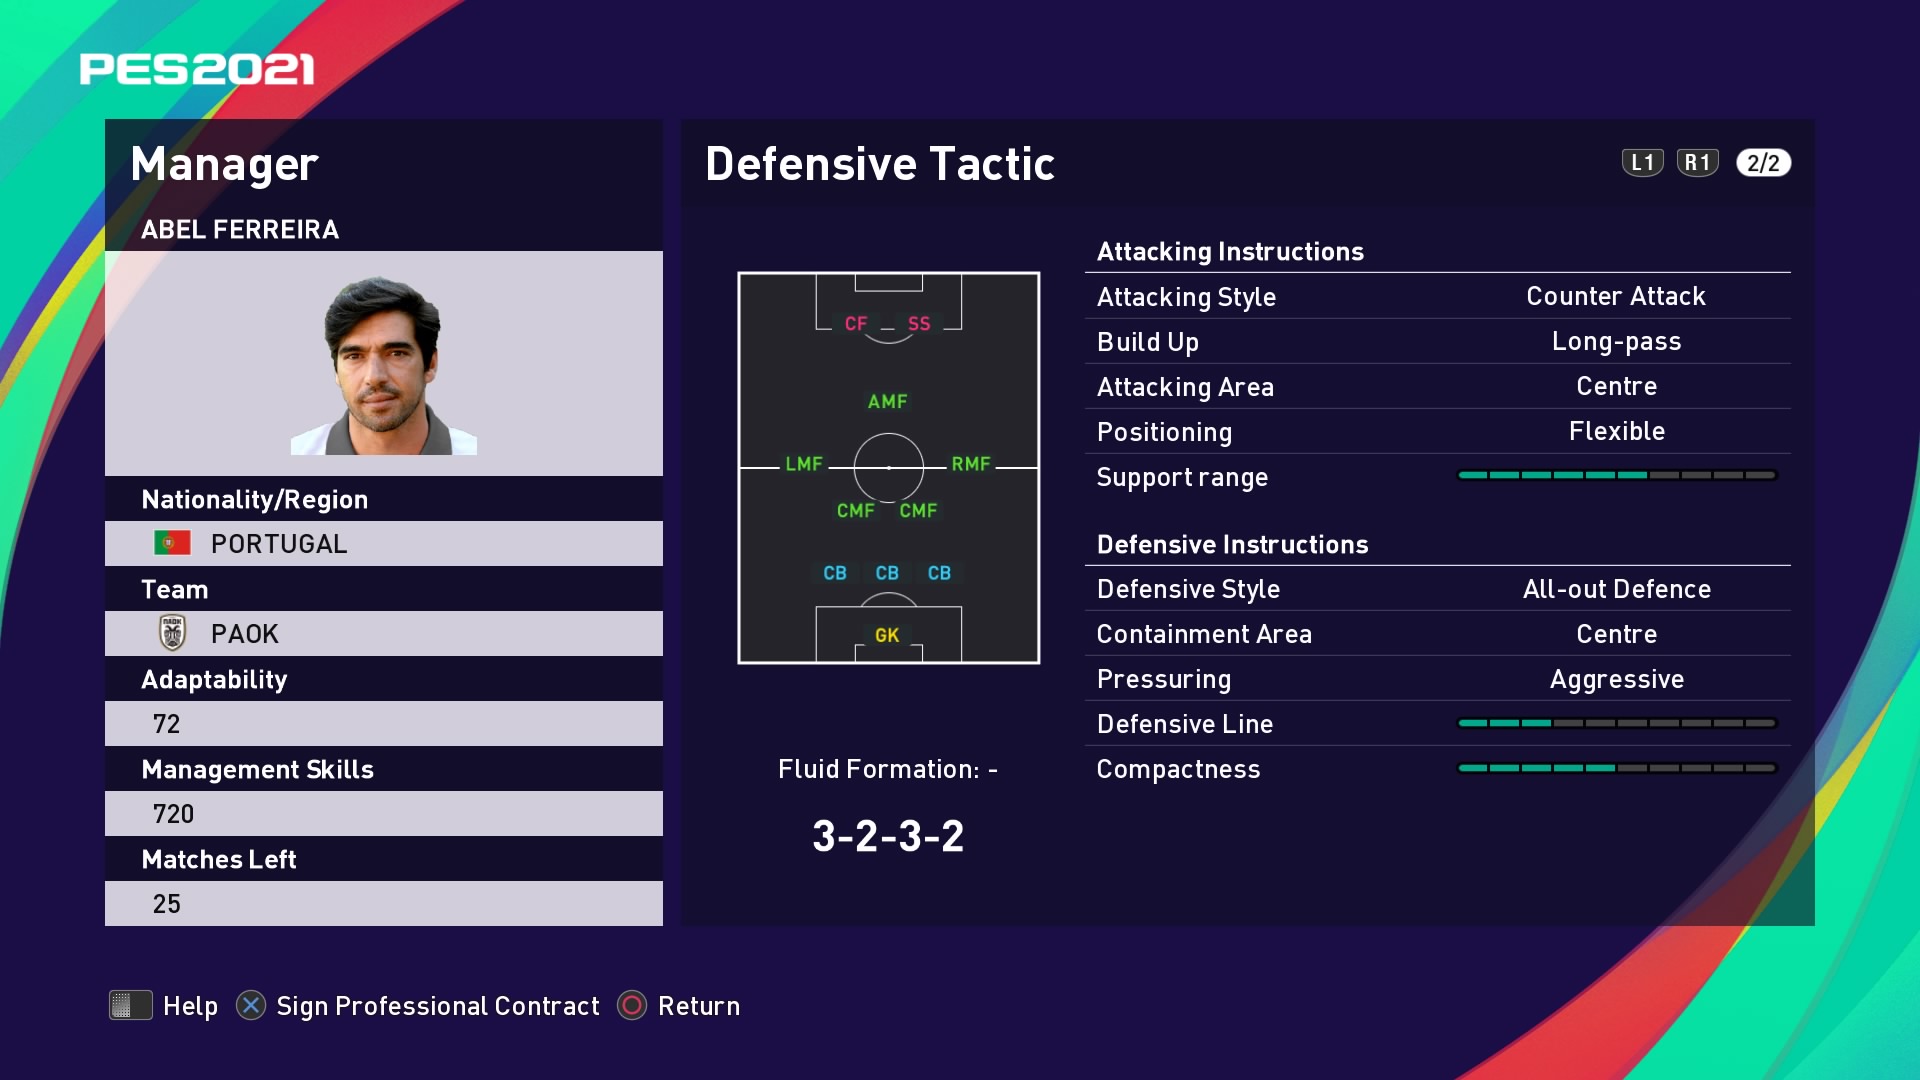 Abel Ferreira Defensive Tactic in PES 2021 myClub